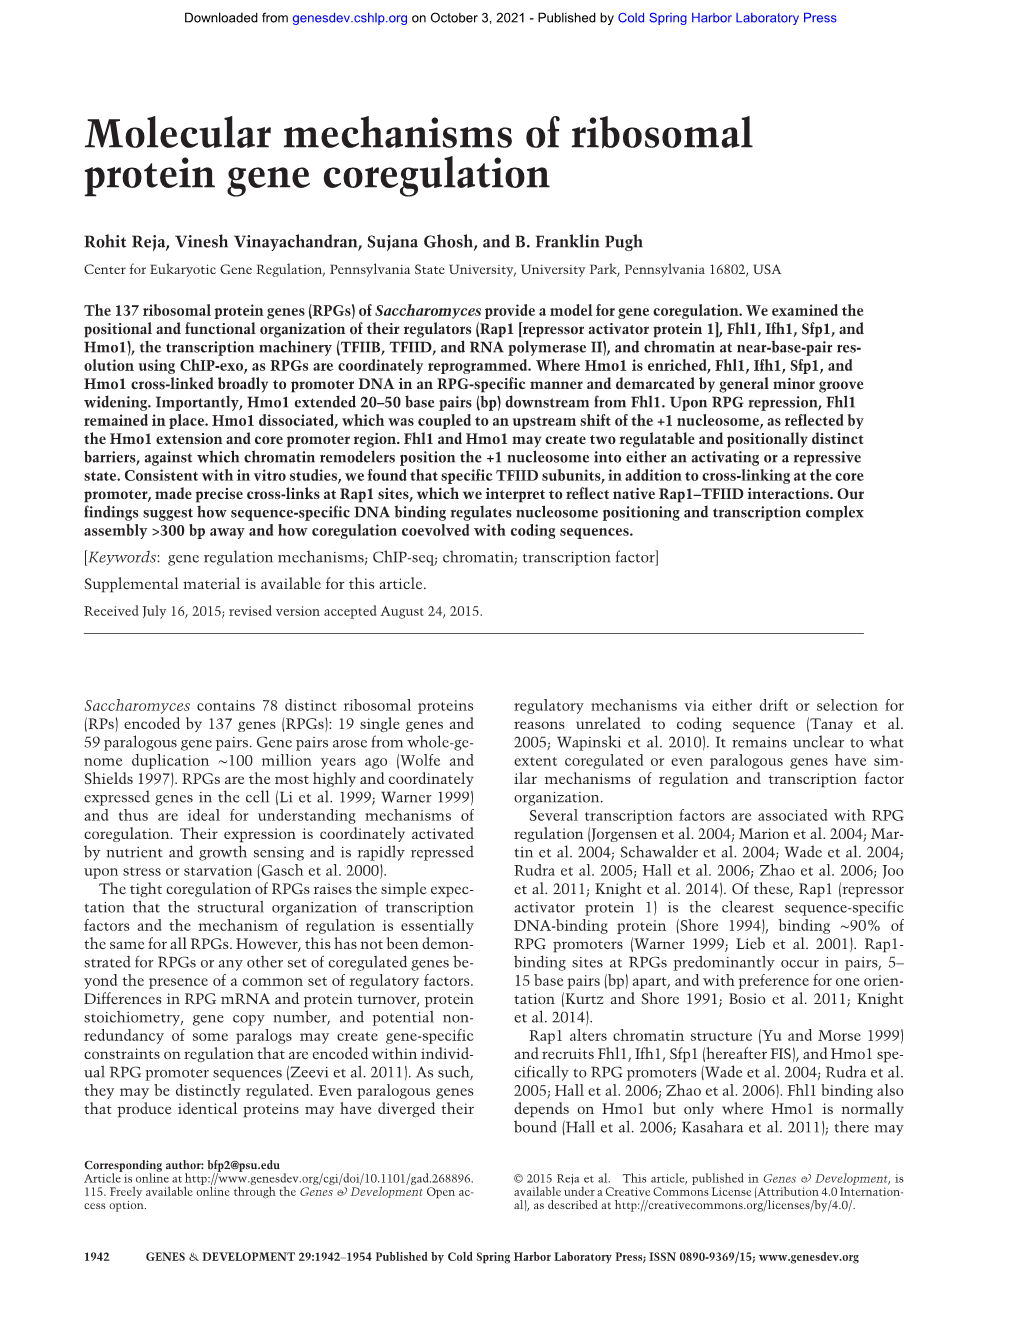 Molecular Mechanisms of Ribosomal Protein Gene Coregulation